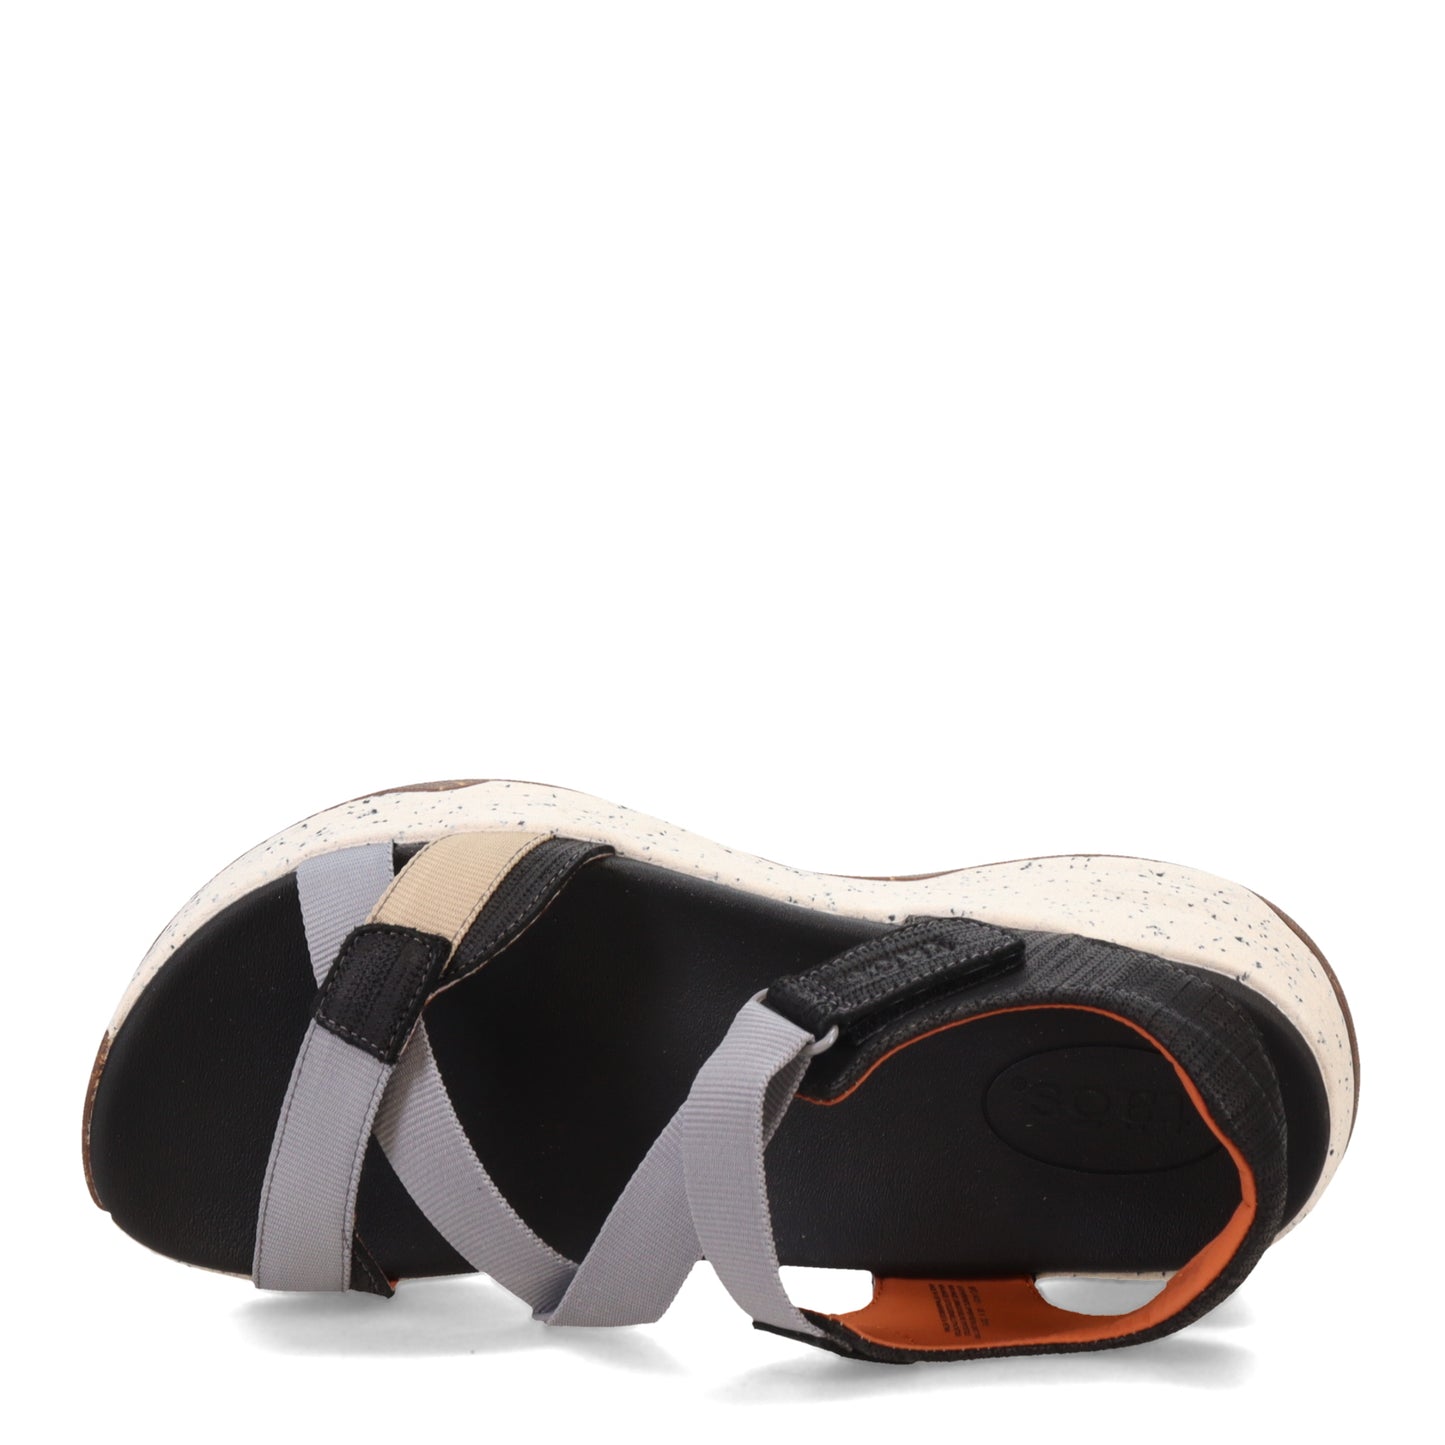 Peltz Shoes  Women's Taos Super Z Sandal Grey Multi SPZ-14131-GRYM